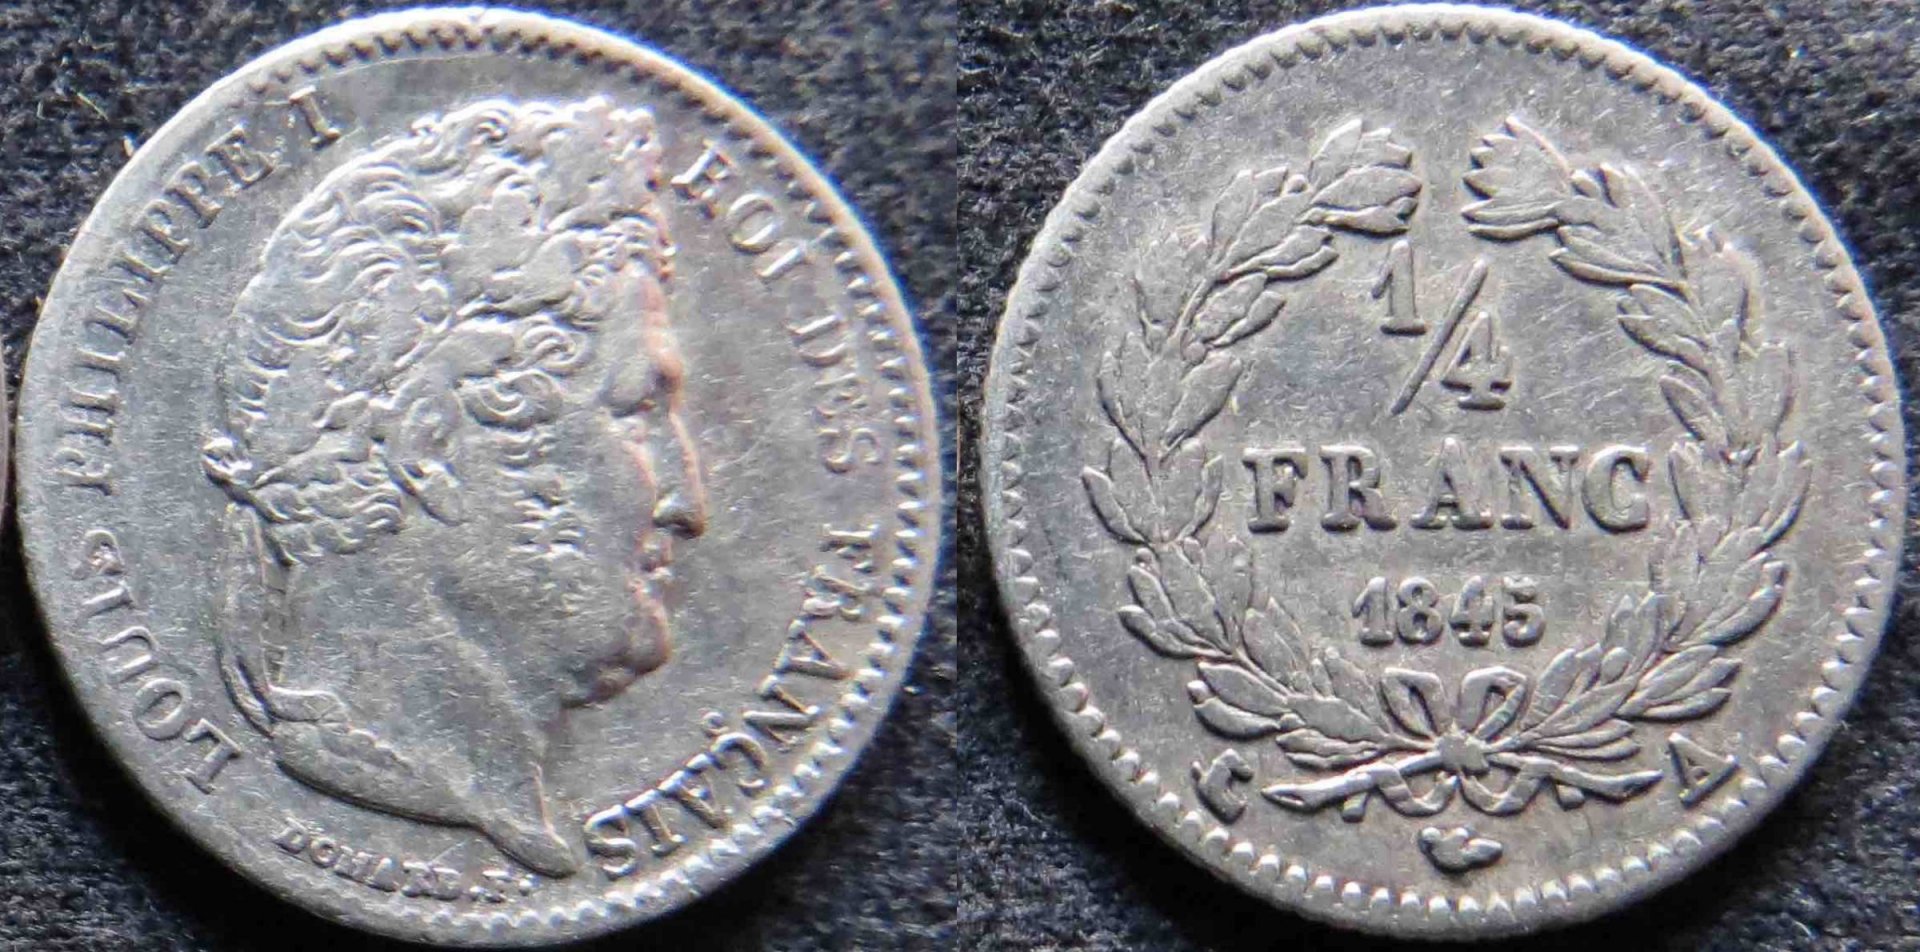 France 1:4 Franc 1845 copy.jpg